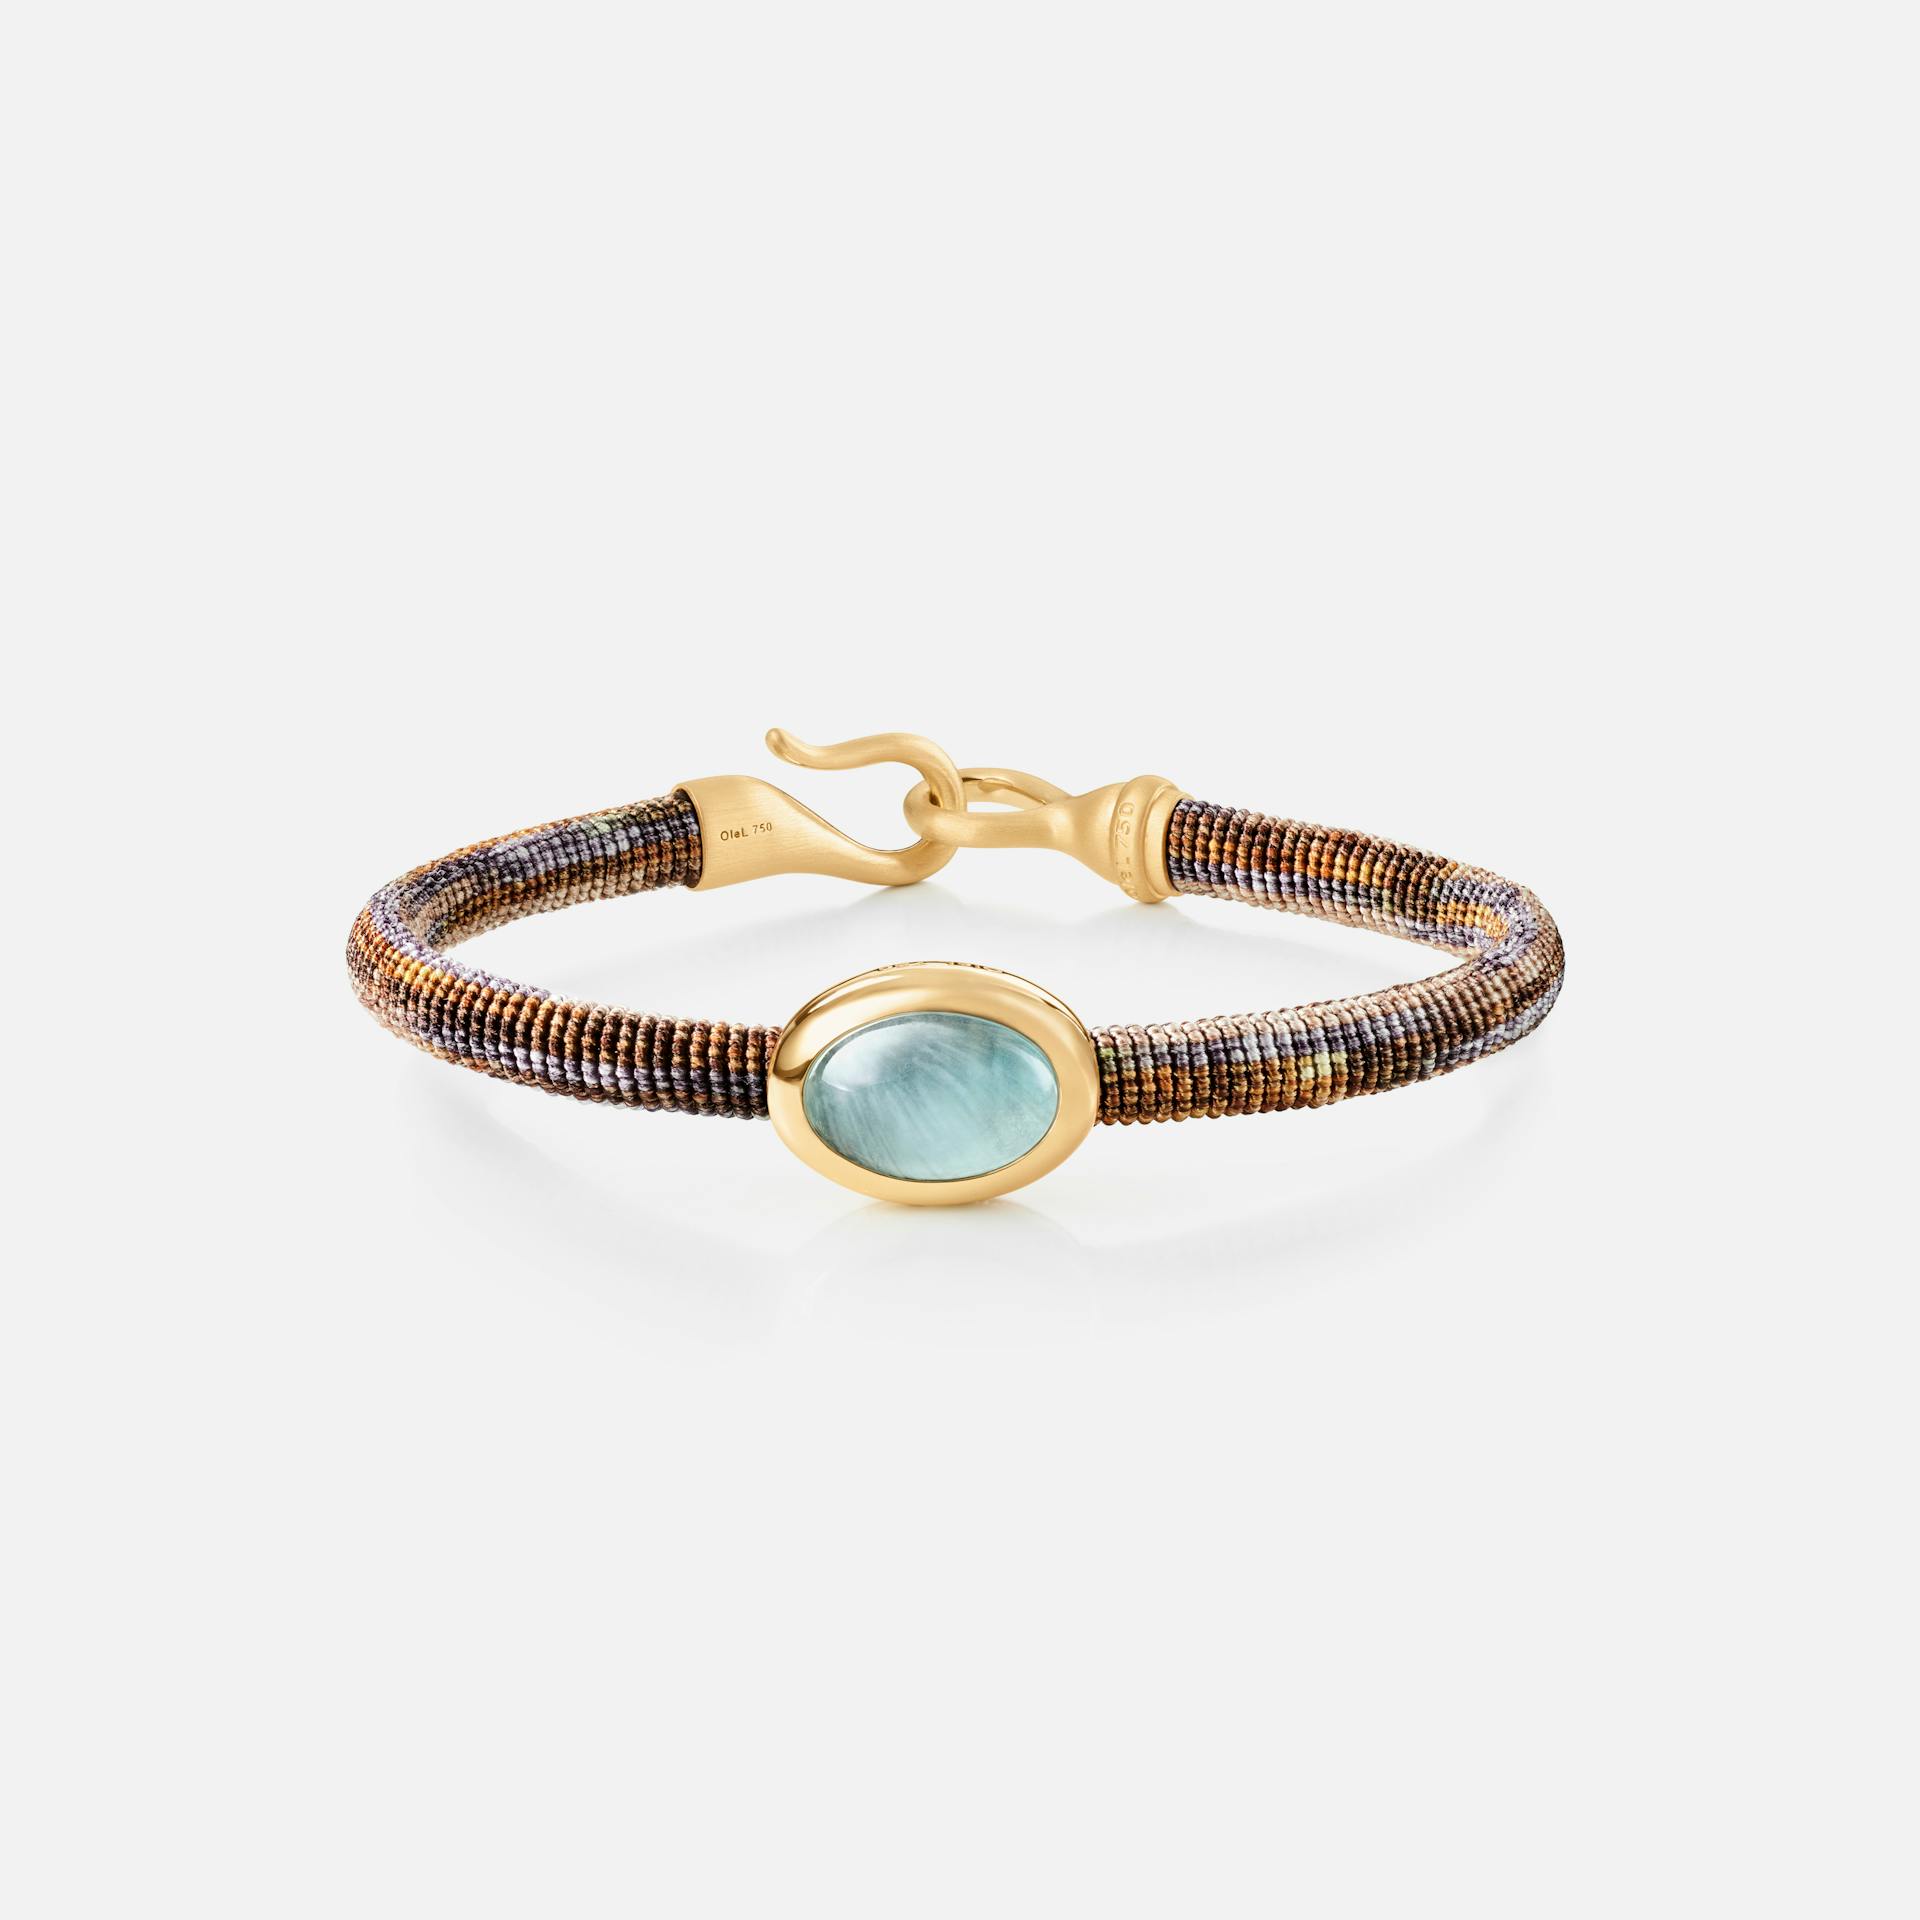 Life Bracelet with aquamarine 6 mm 18k guld og akvamarin med Velvet snor